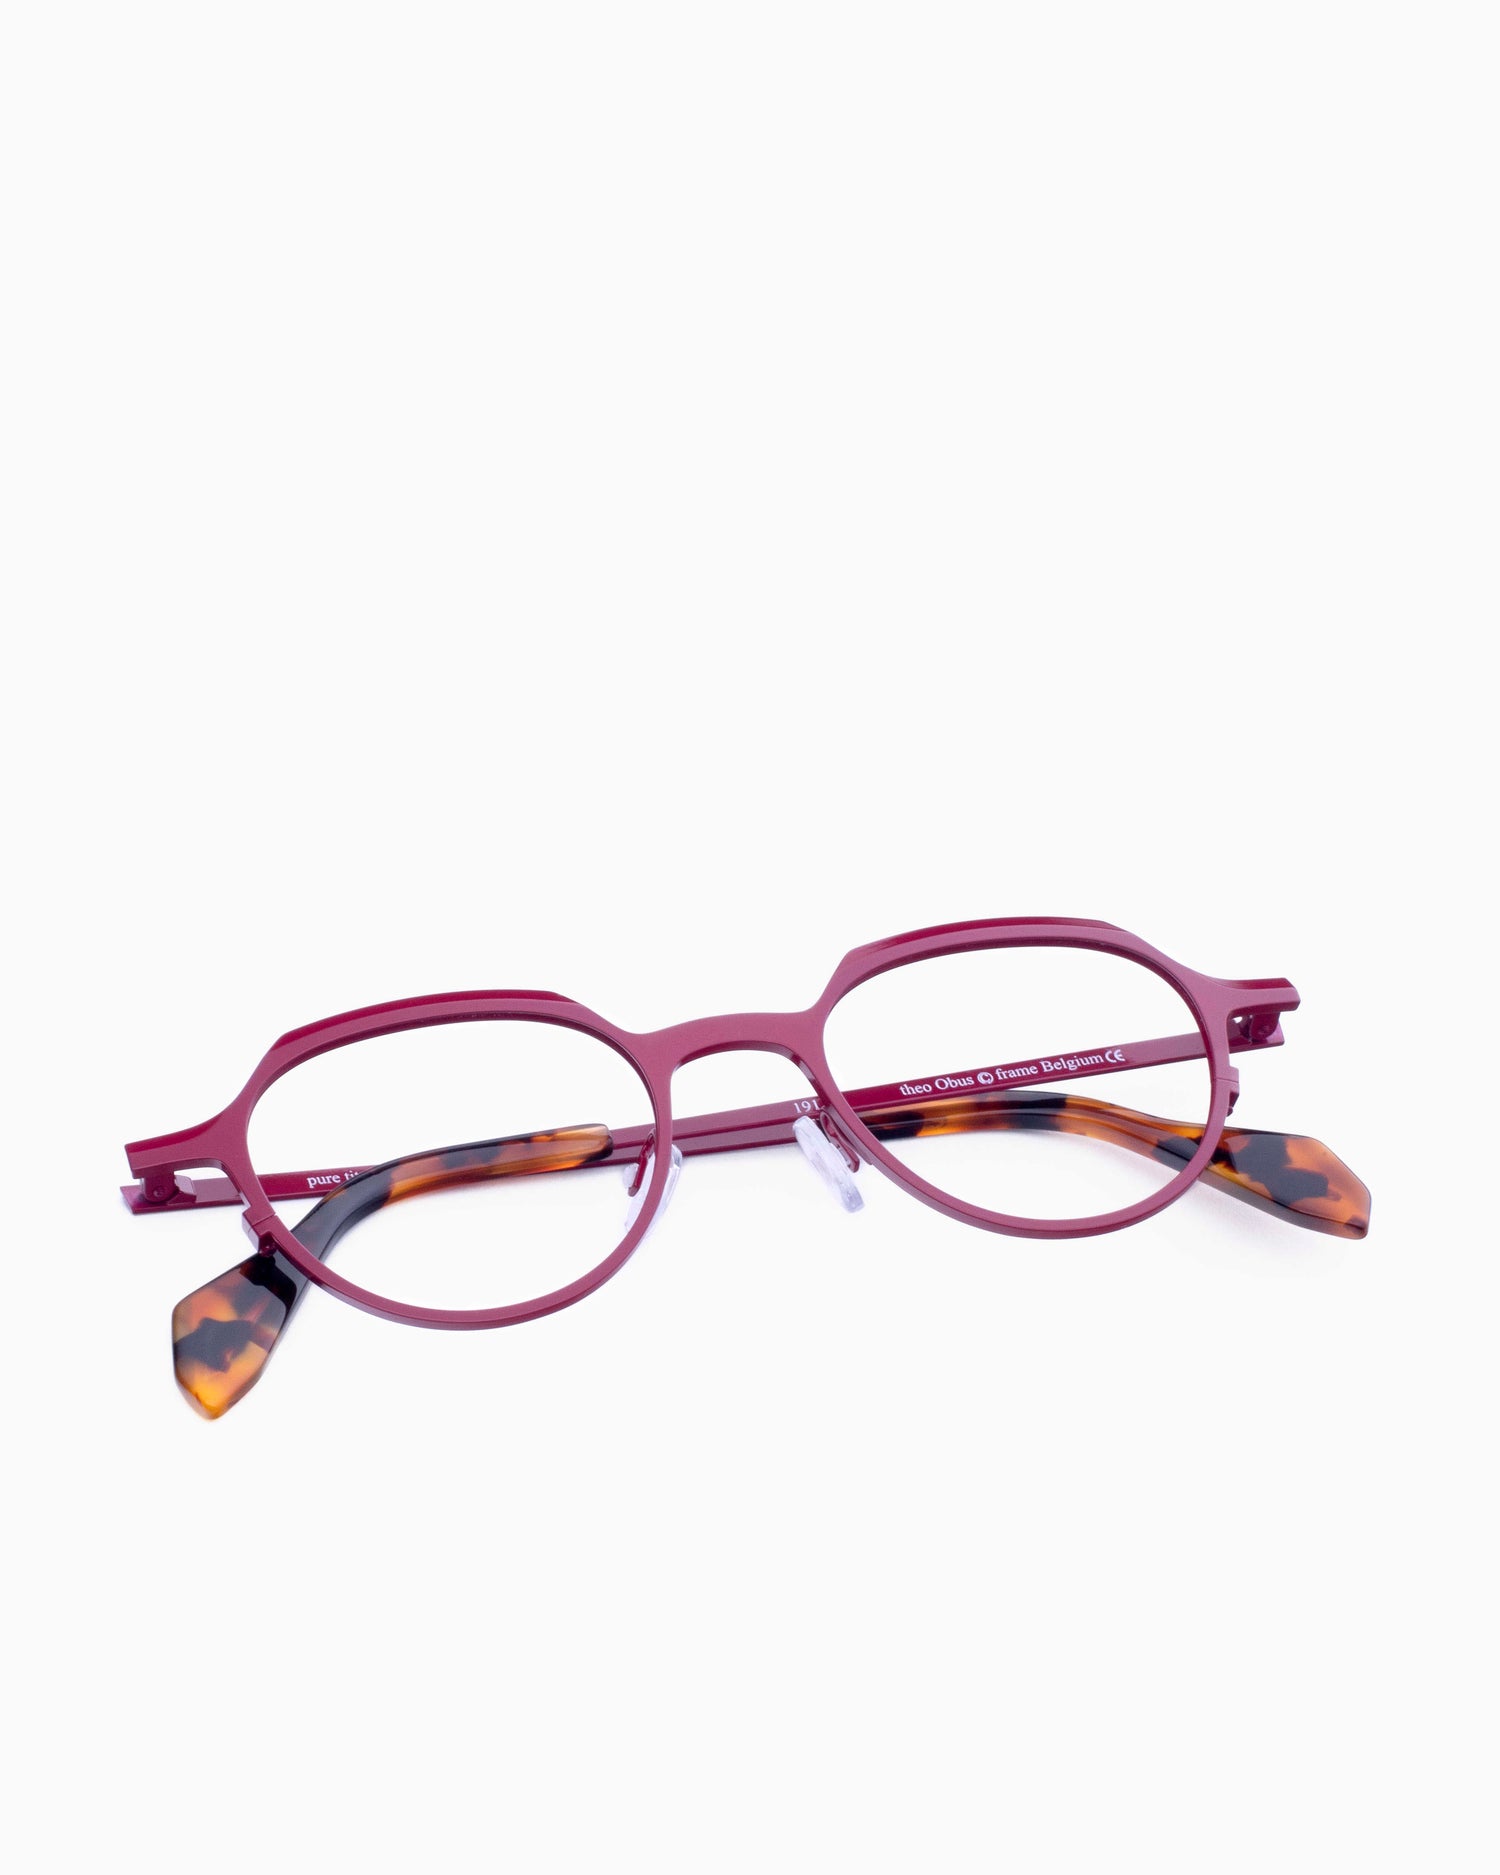 Theo - Obus - 191 | Bar à lunettes:  Marie-Sophie Dion